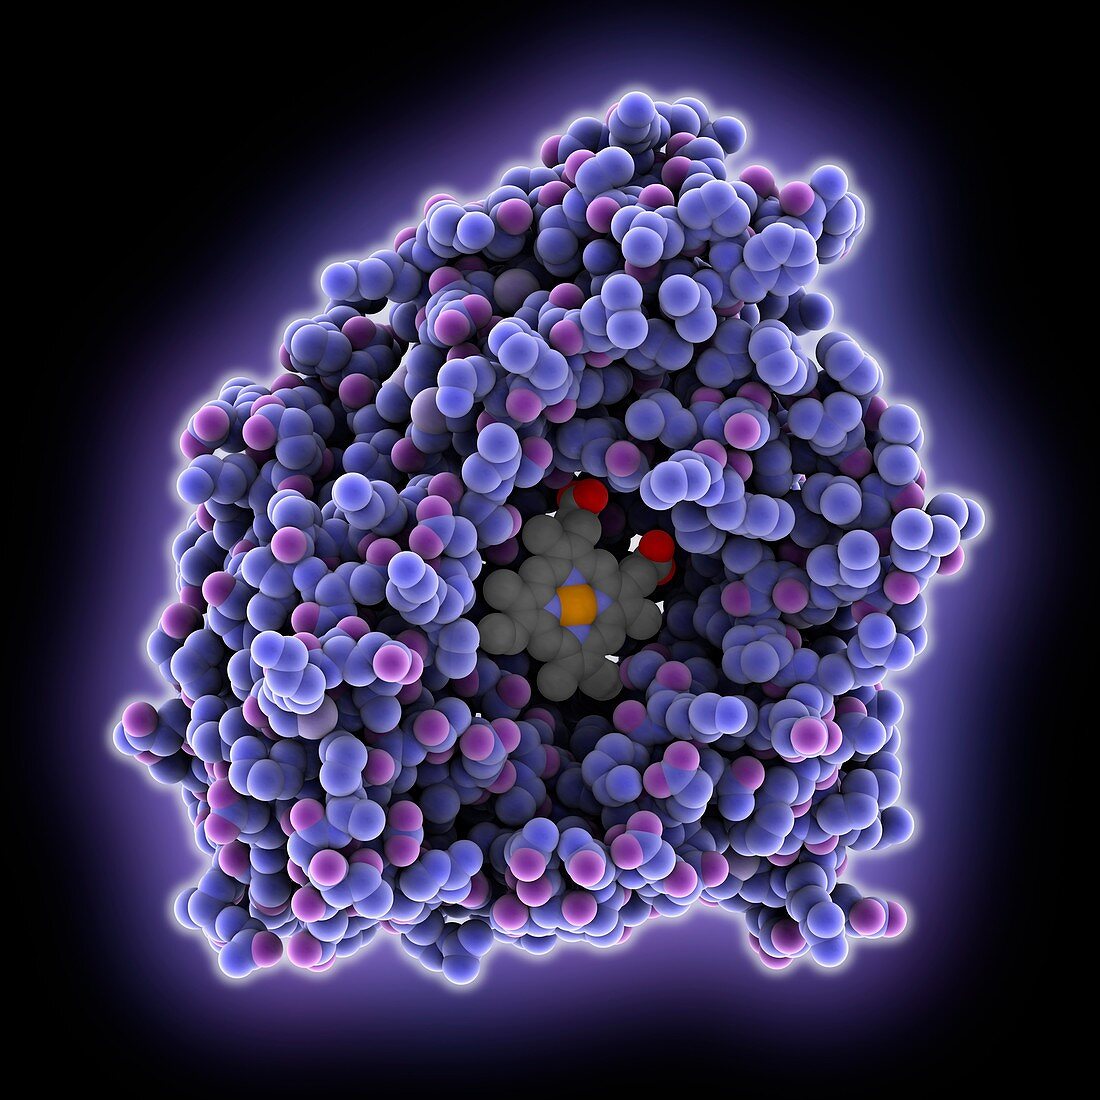 Human cytochrome P450 molecule